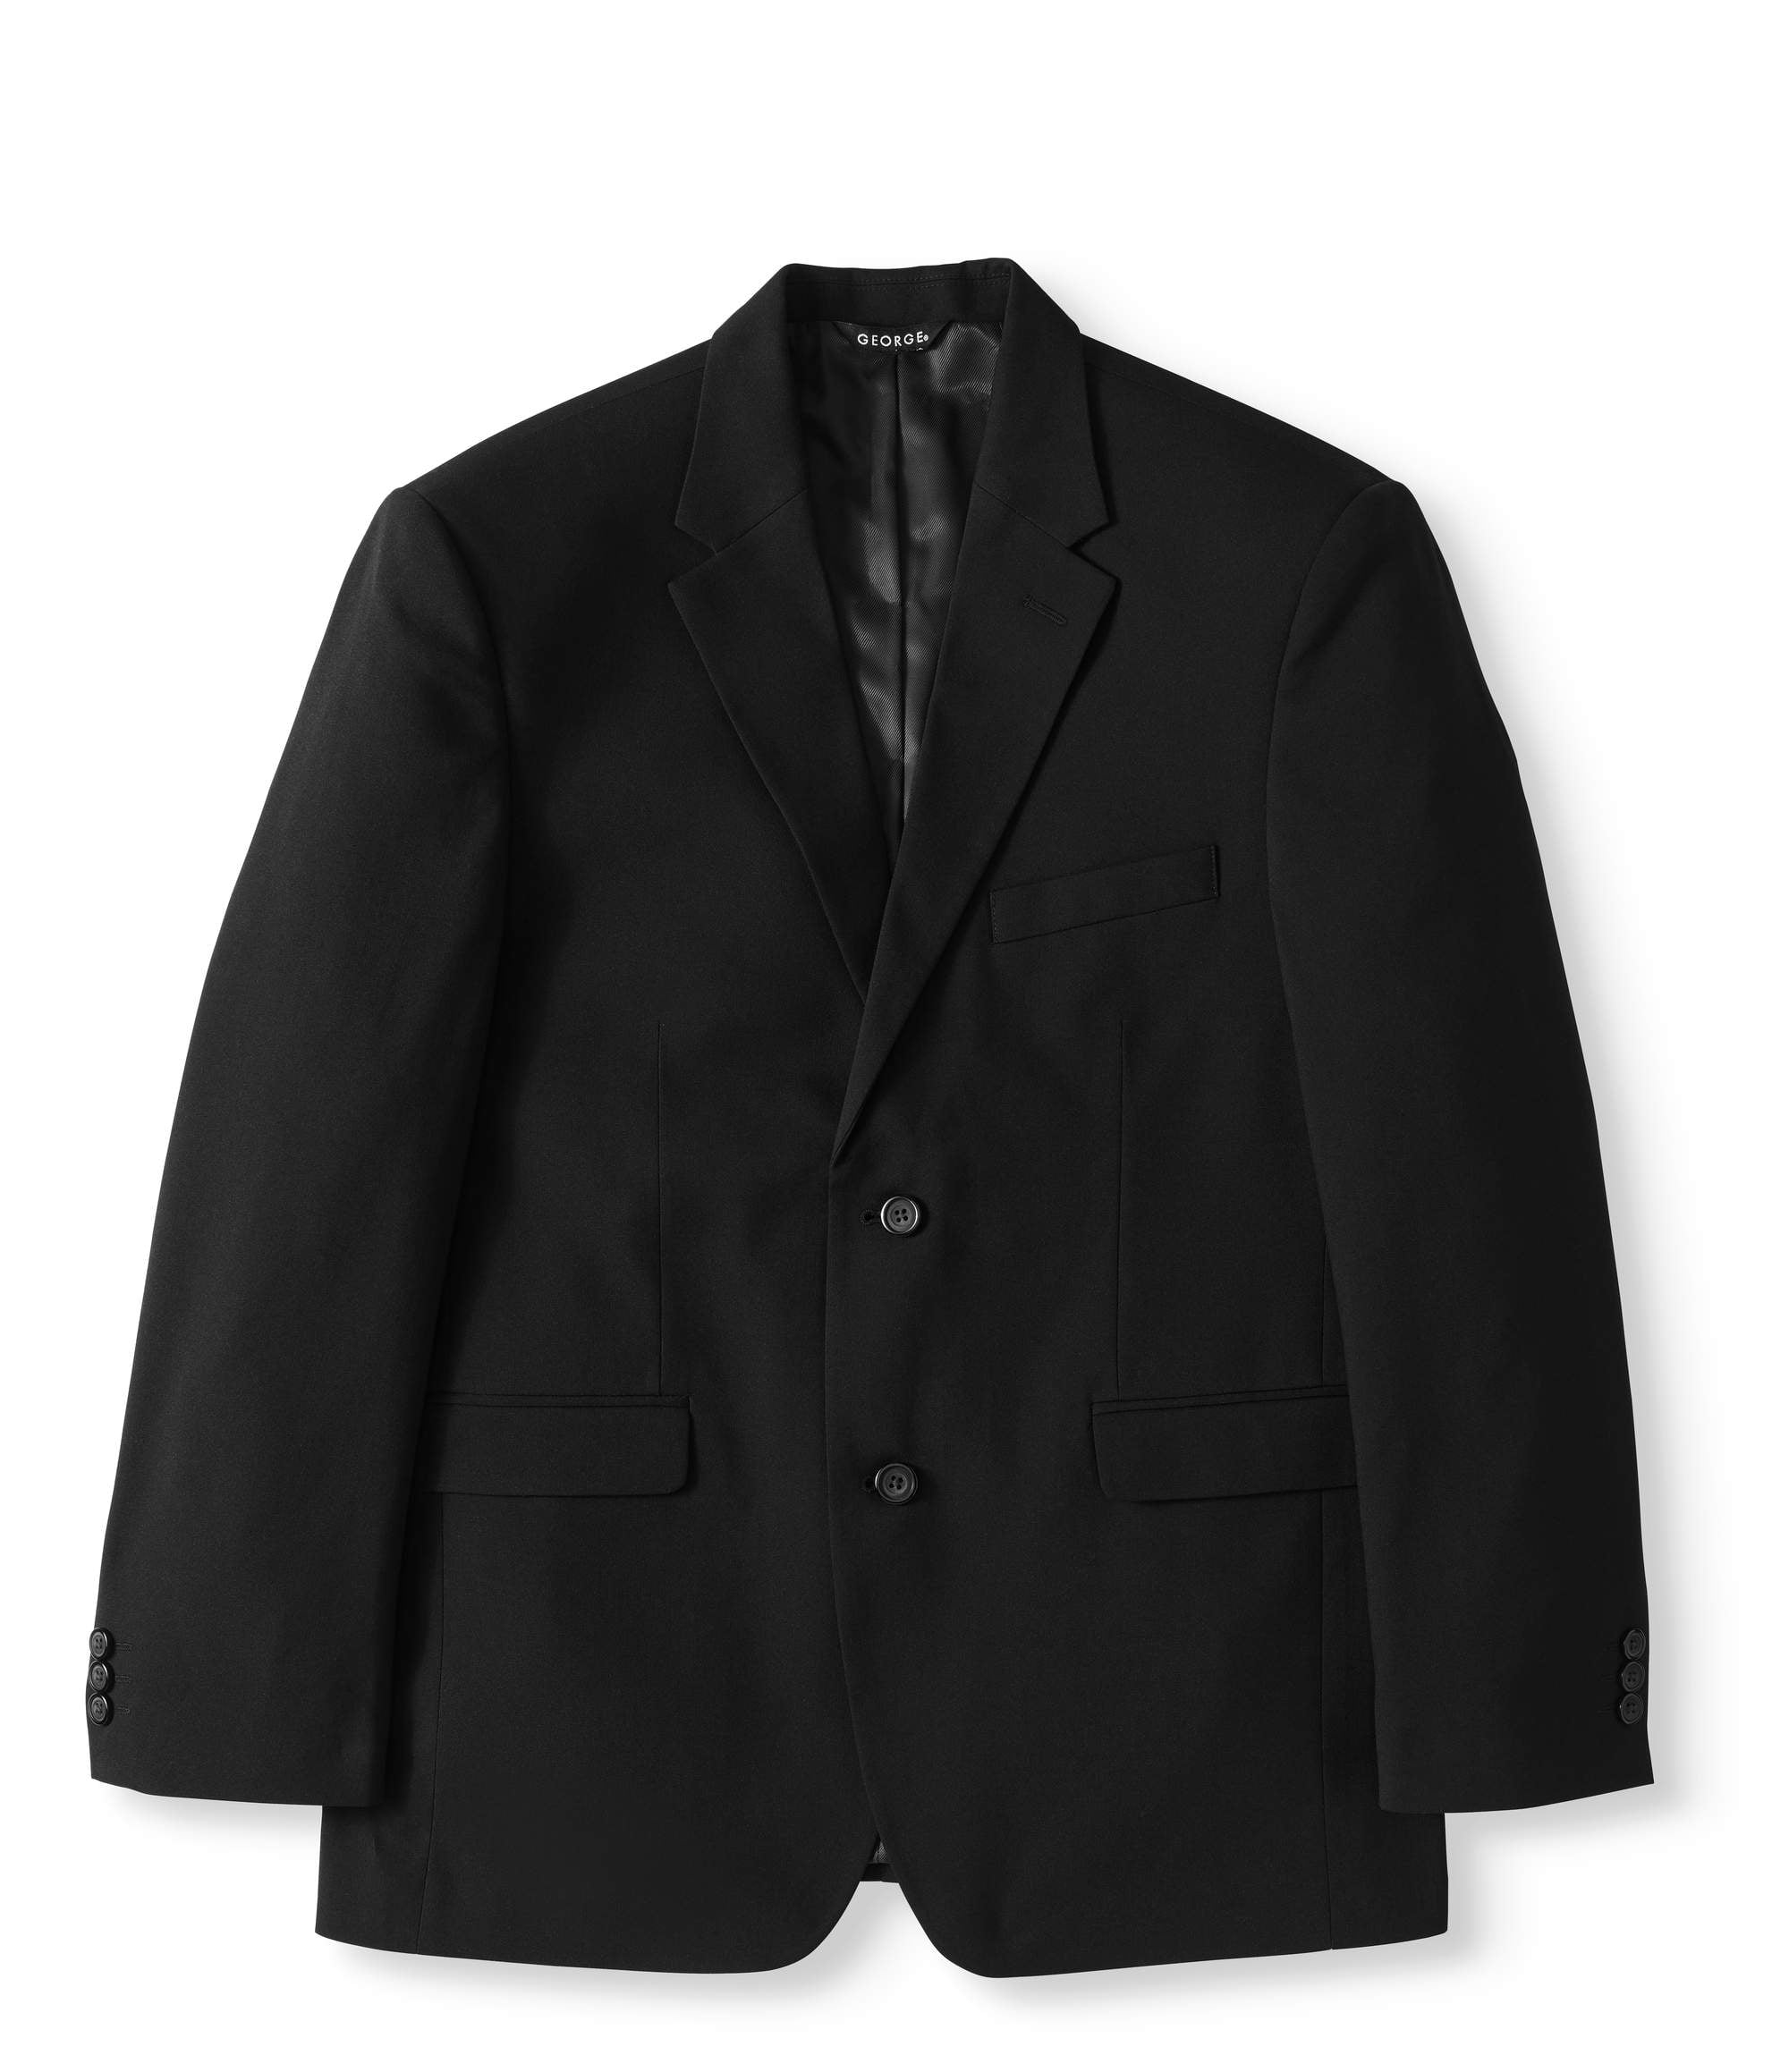 George - George Men's Performance Comfort Flex Suit Jacket - Walmart.com